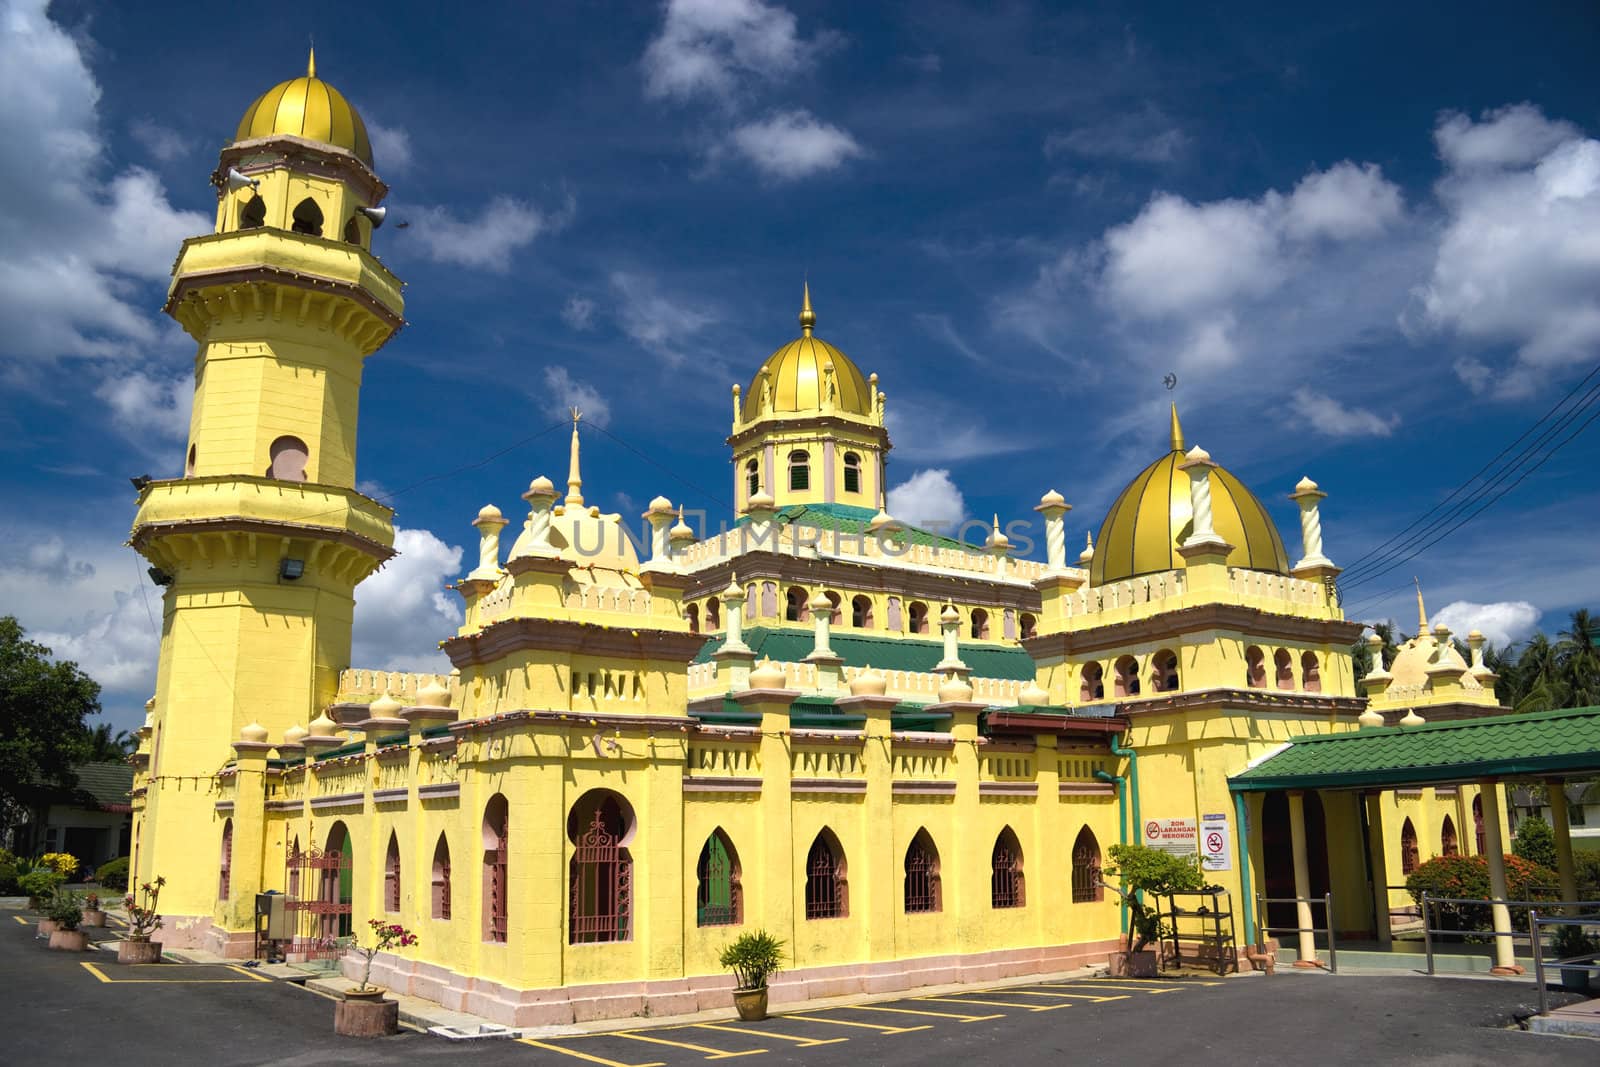 Sultan Alaeddin Mosque, Malaysia by shariffc